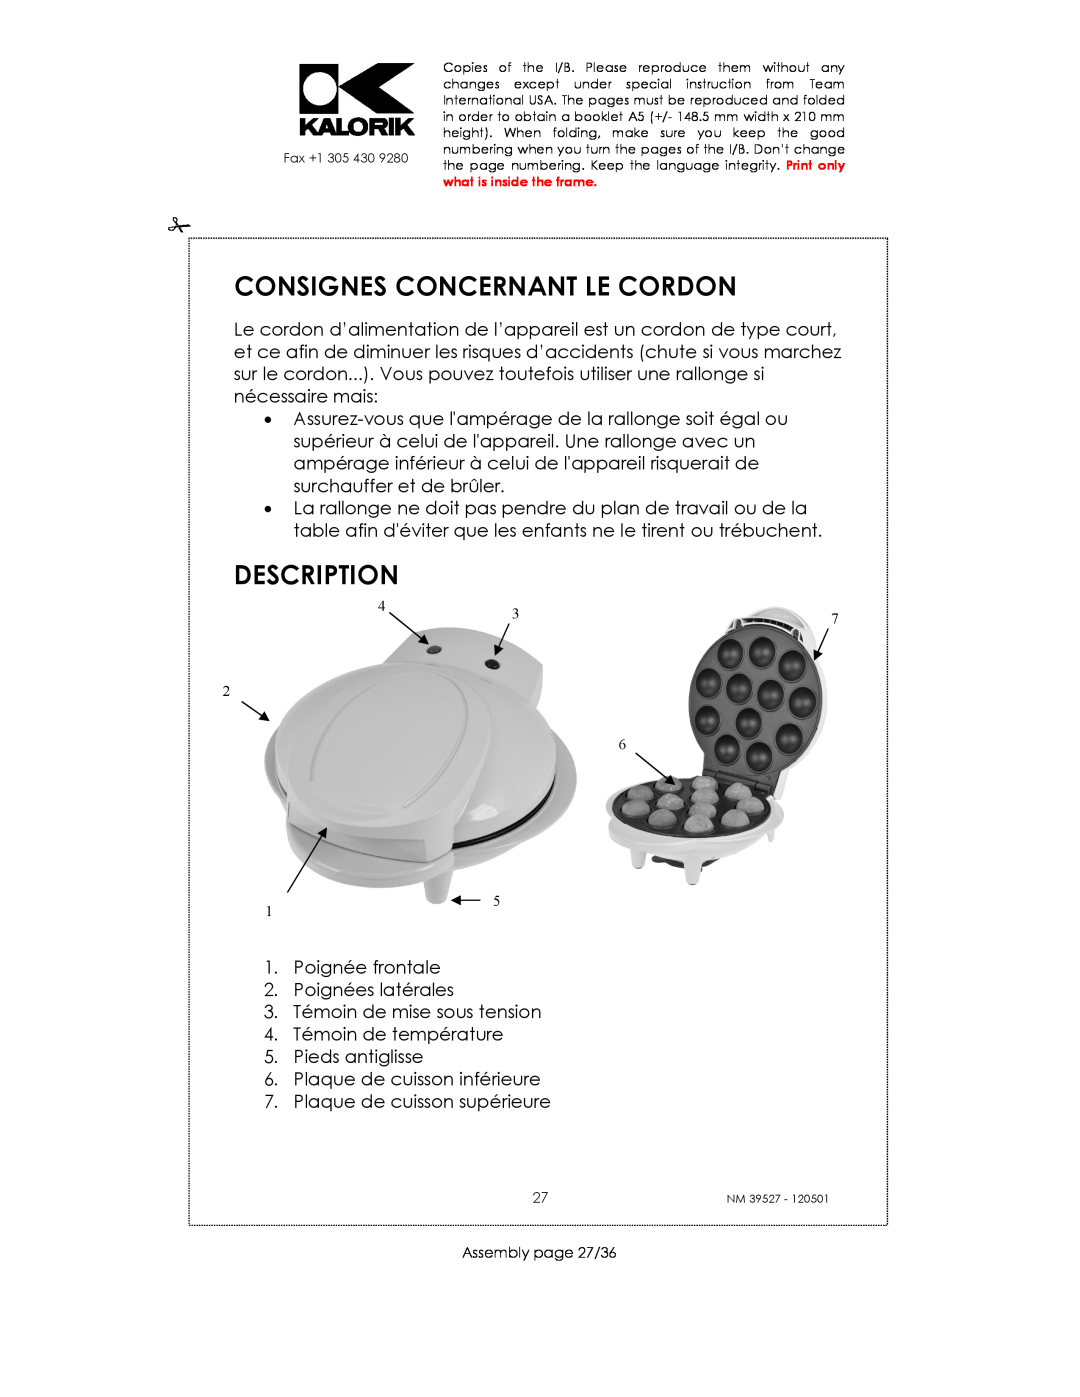 Kalorik NM 39527 manual Consignes Concernant Le Cordon, Description 